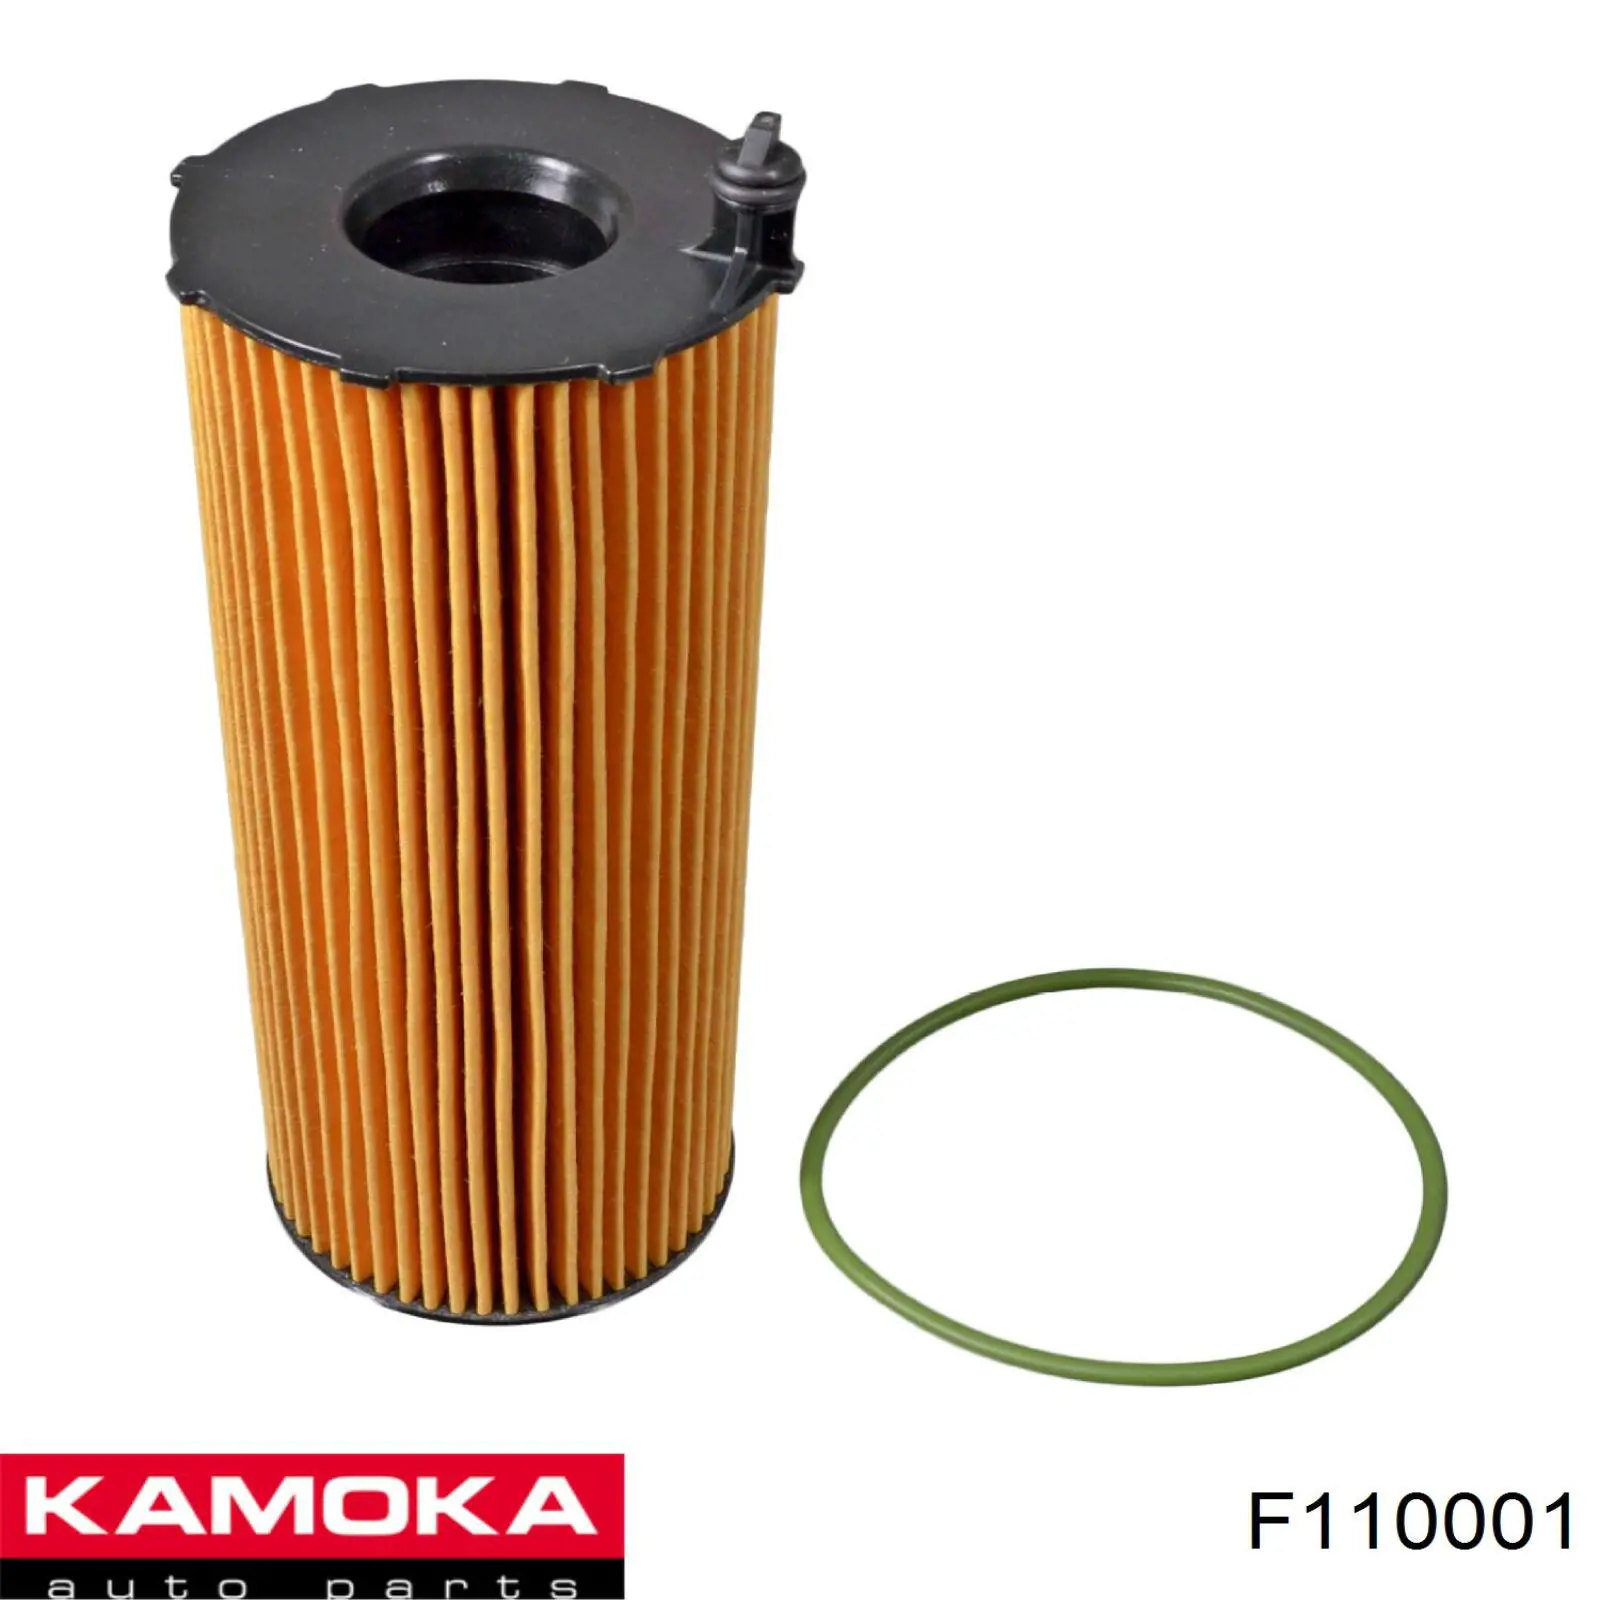 F110001 Kamoka filtro de aceite